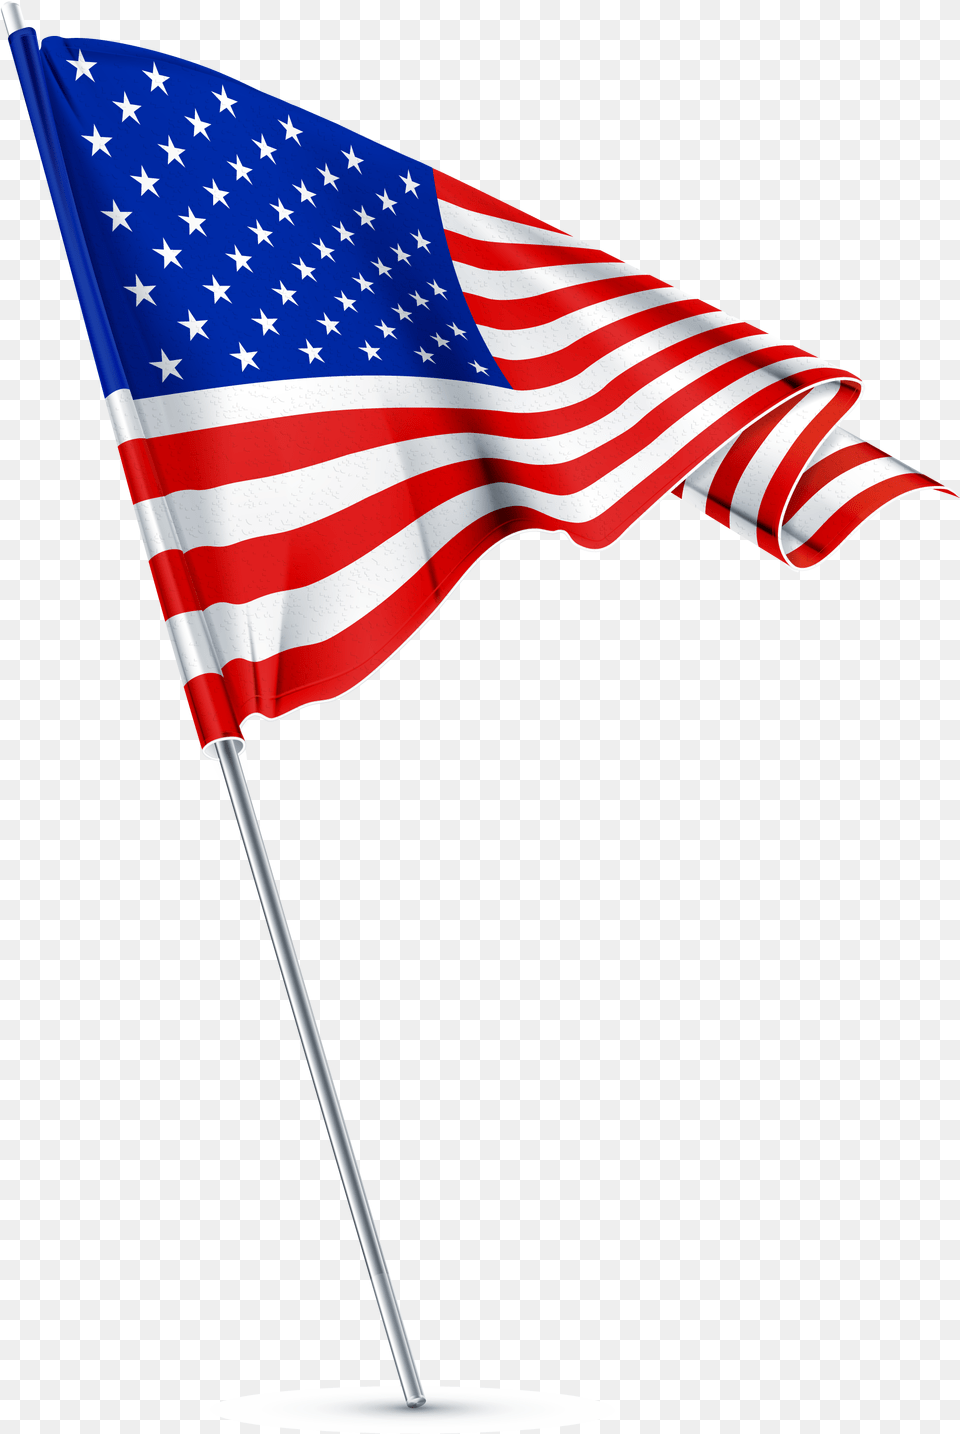 2015 Birmingham Veterans Day Parade American Flag Clip Art, American Flag Png